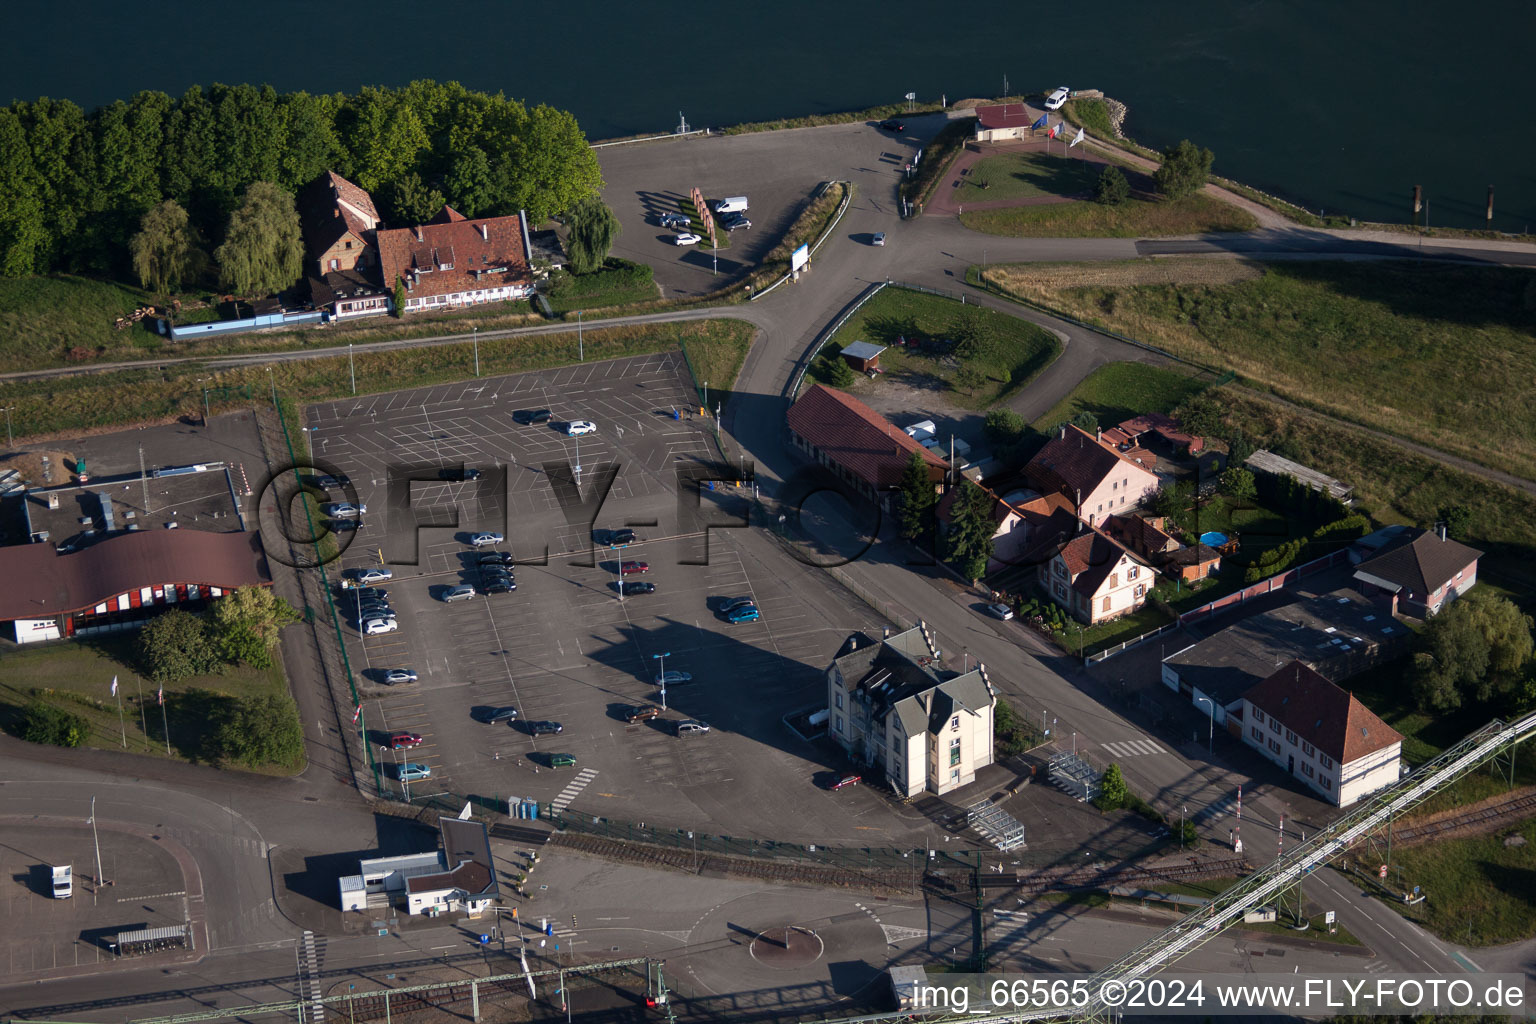 Luftbild von Au Bord du Rhin in Lauterbourg im Bundesland Bas-Rhin, Frankreich